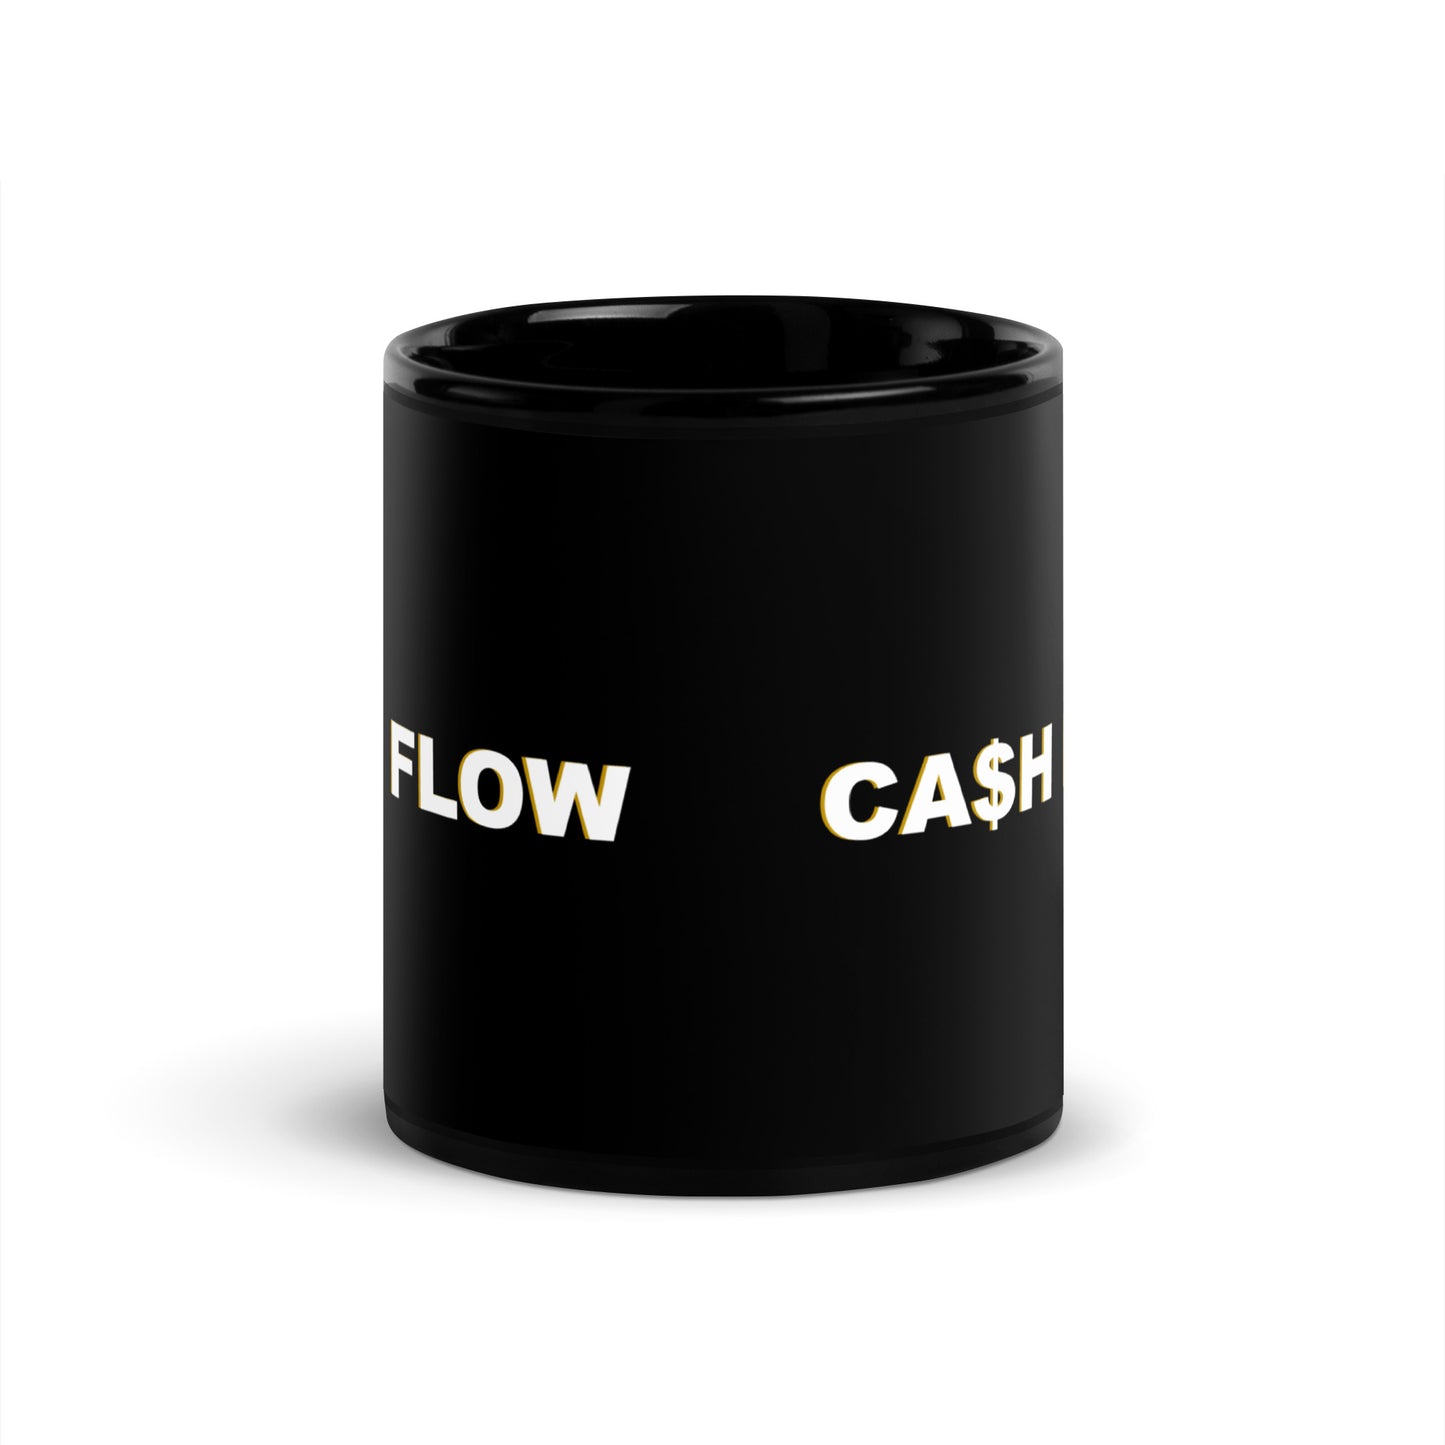 CA$H FLOW Black Glossy Mug